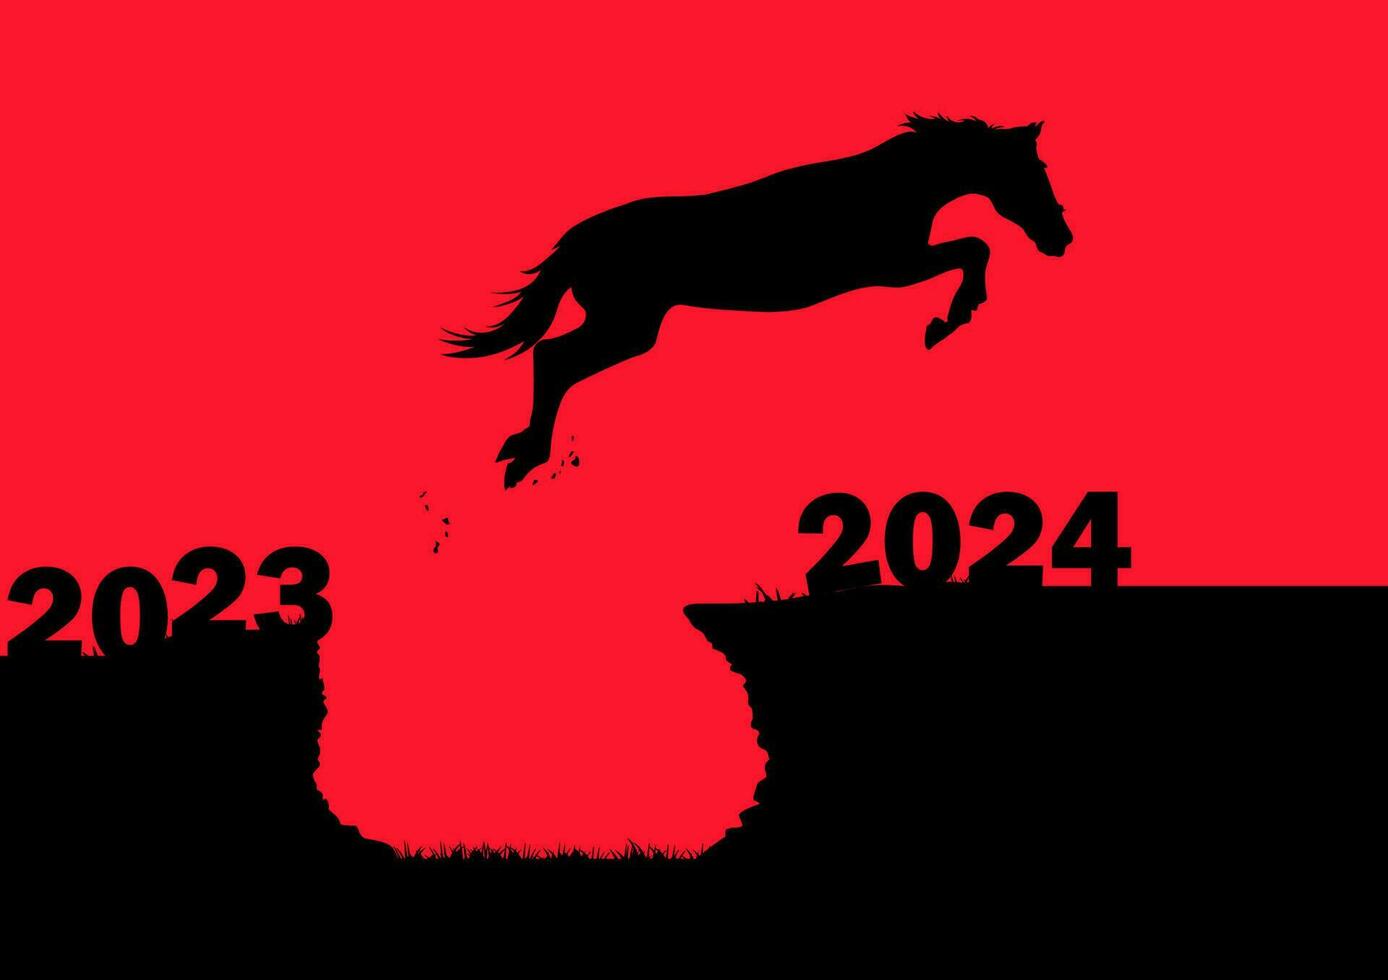 gráficos diseño silueta caballo saltando desde 2023 a 2024 nuevo año con amanecer antecedentes vector ilustración